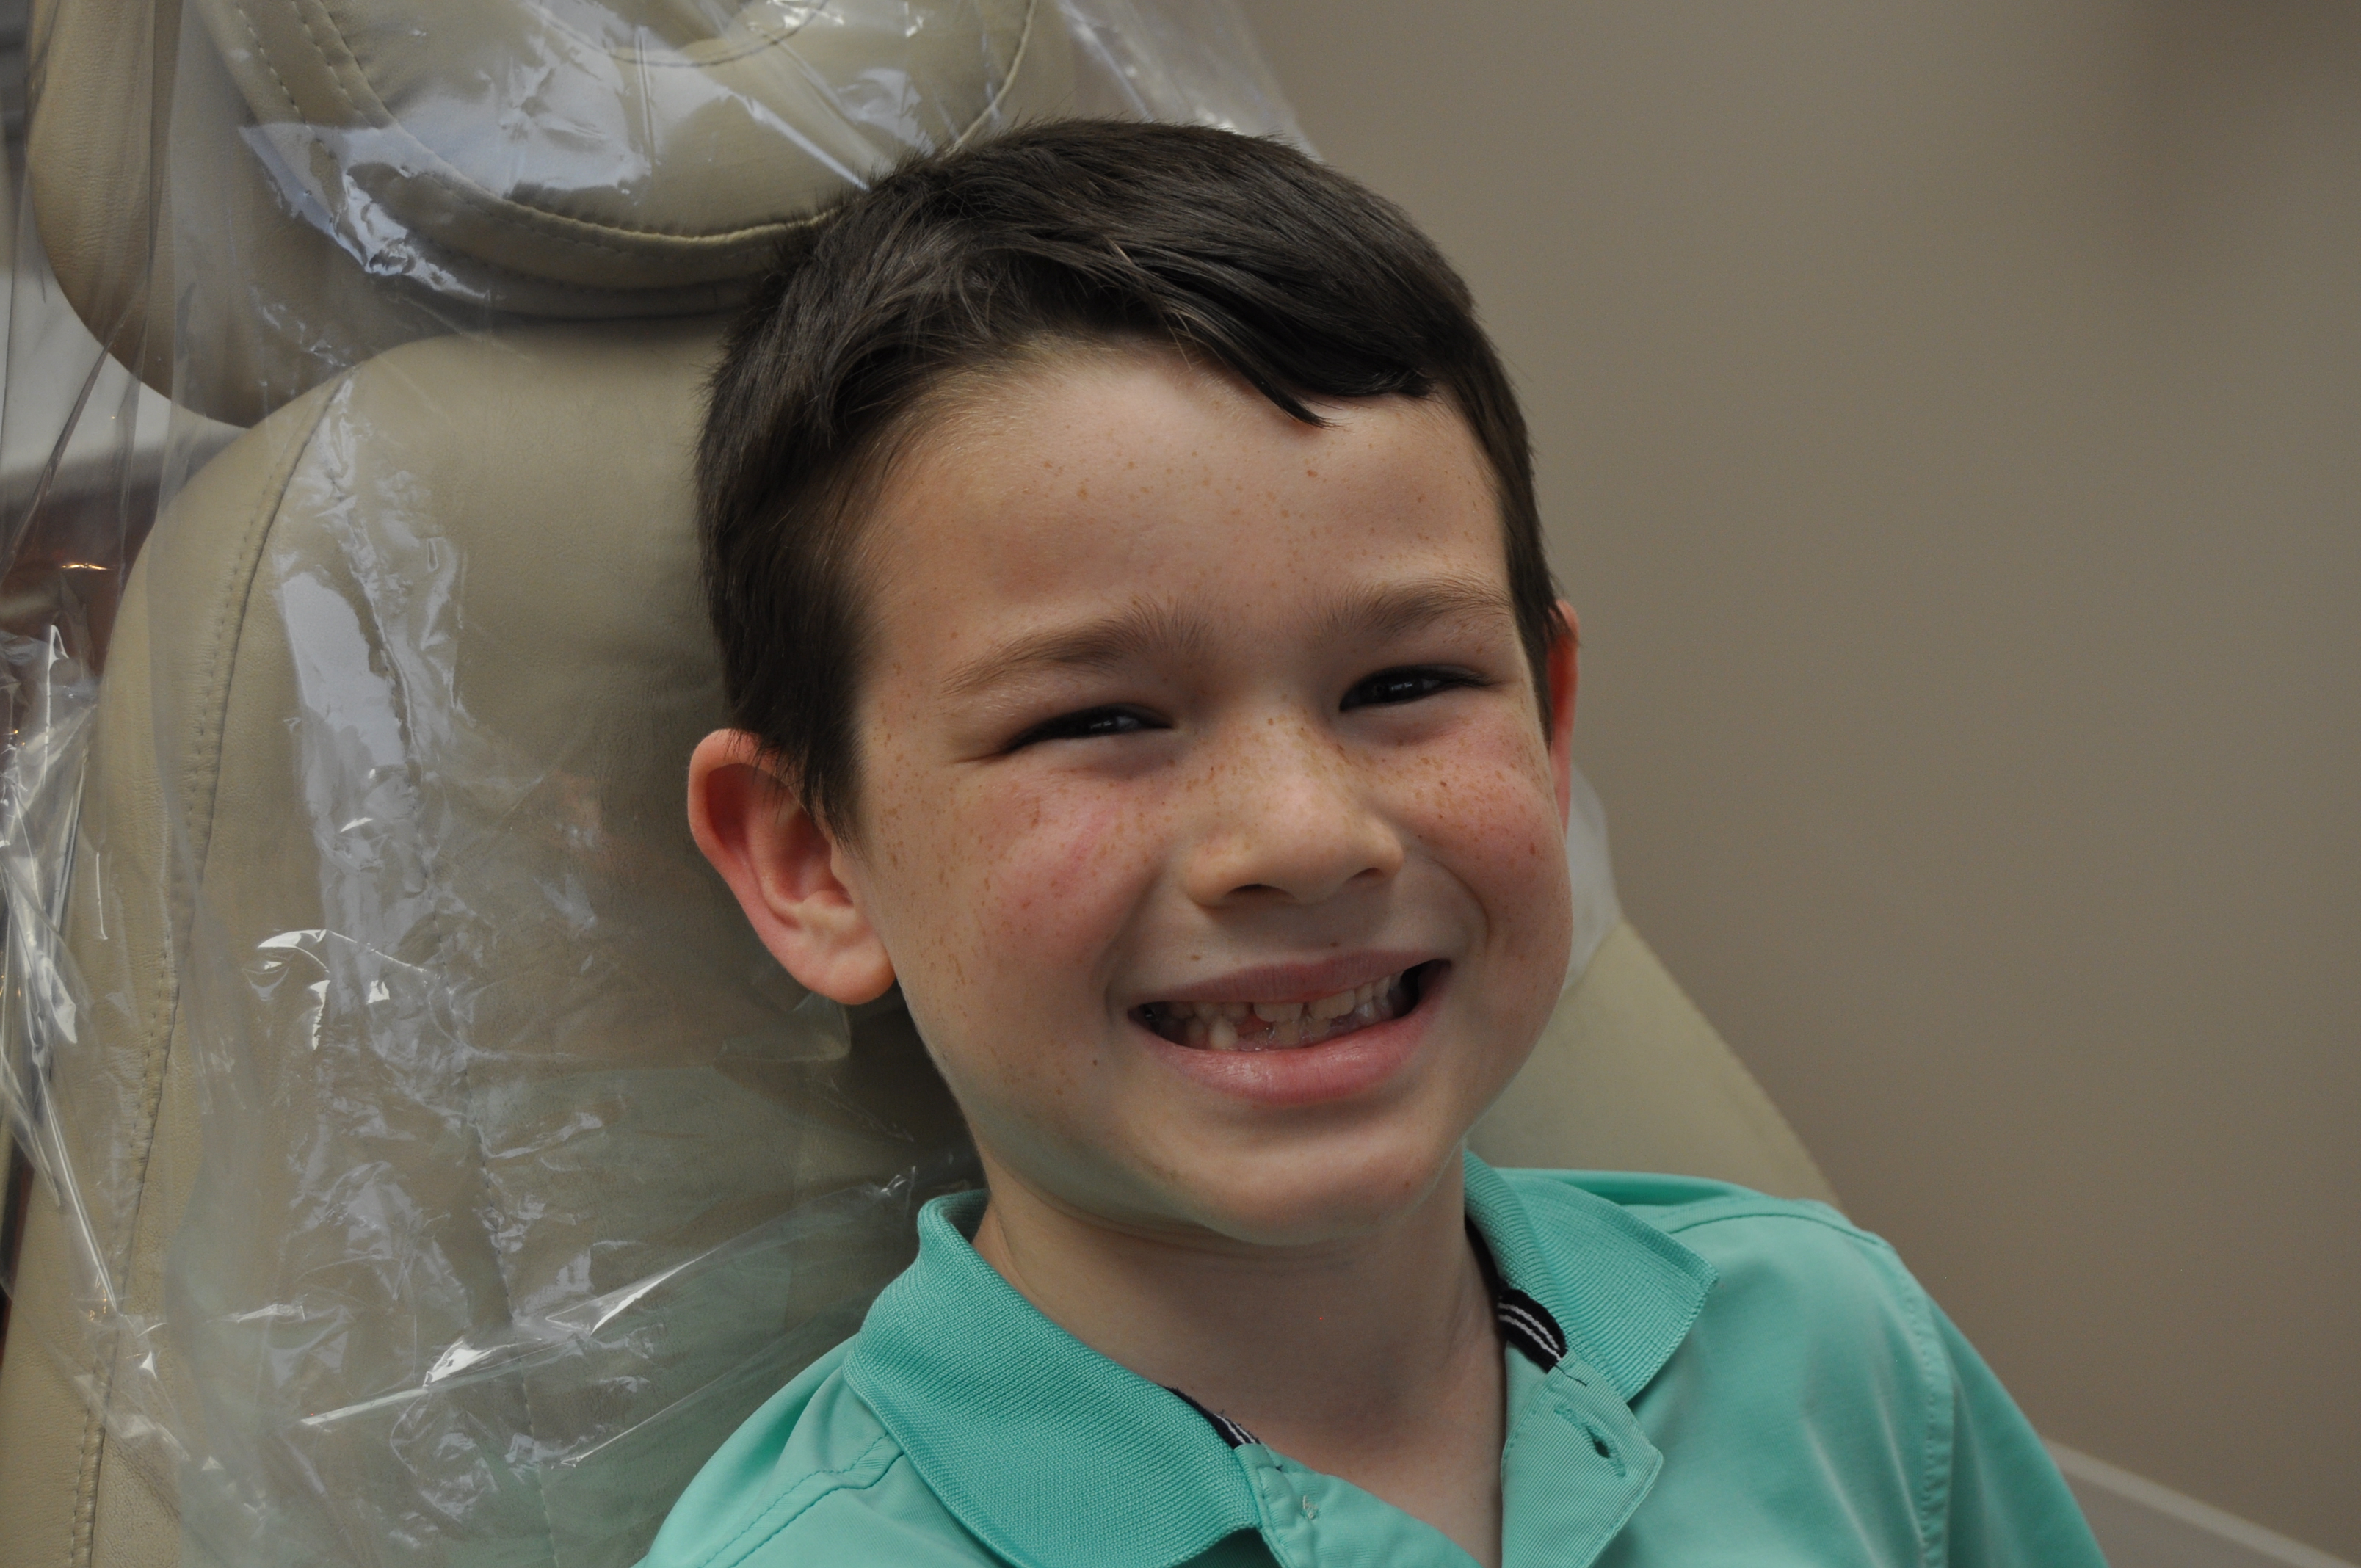 Boy Smiling in Dentist Chair